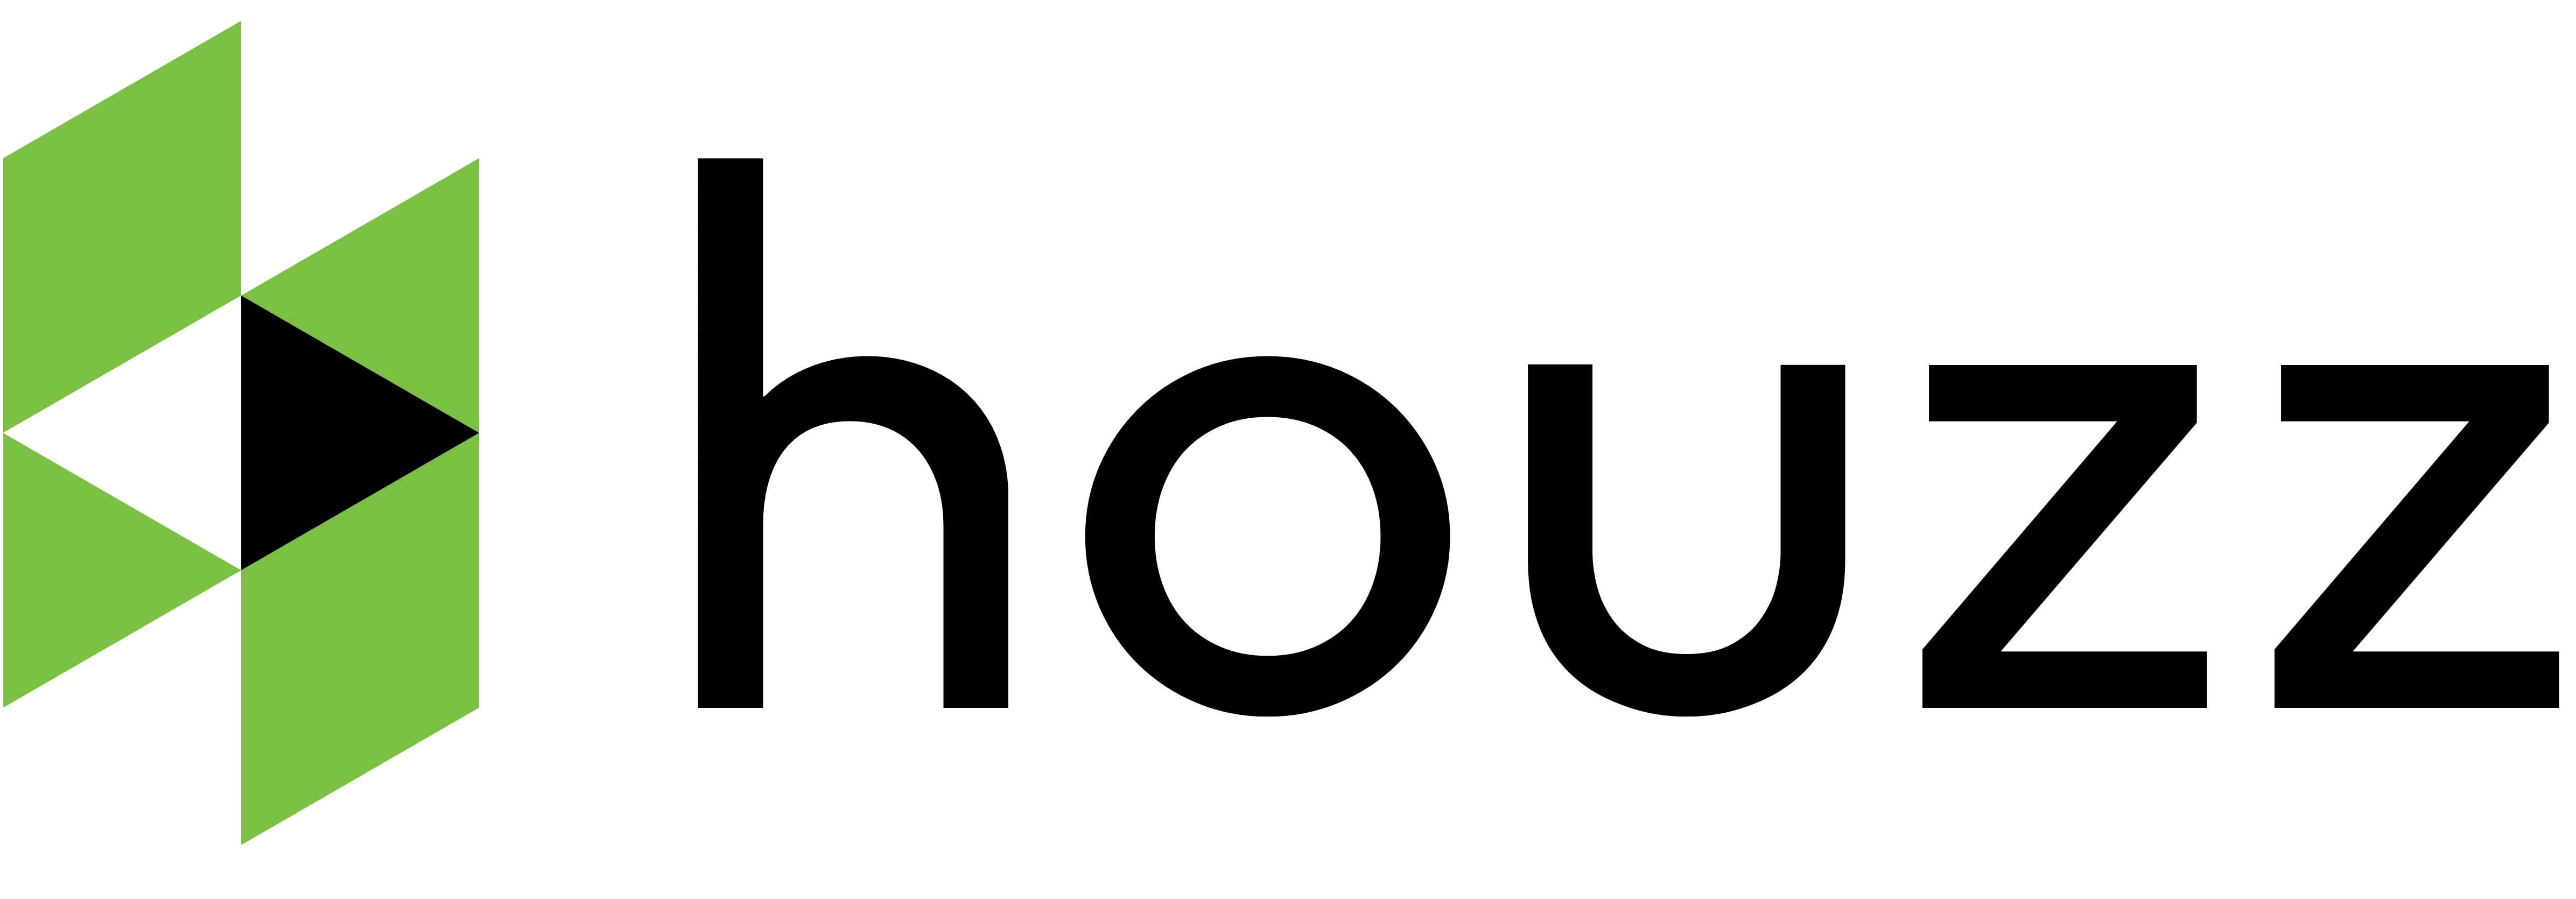 Houzz logo, logotype